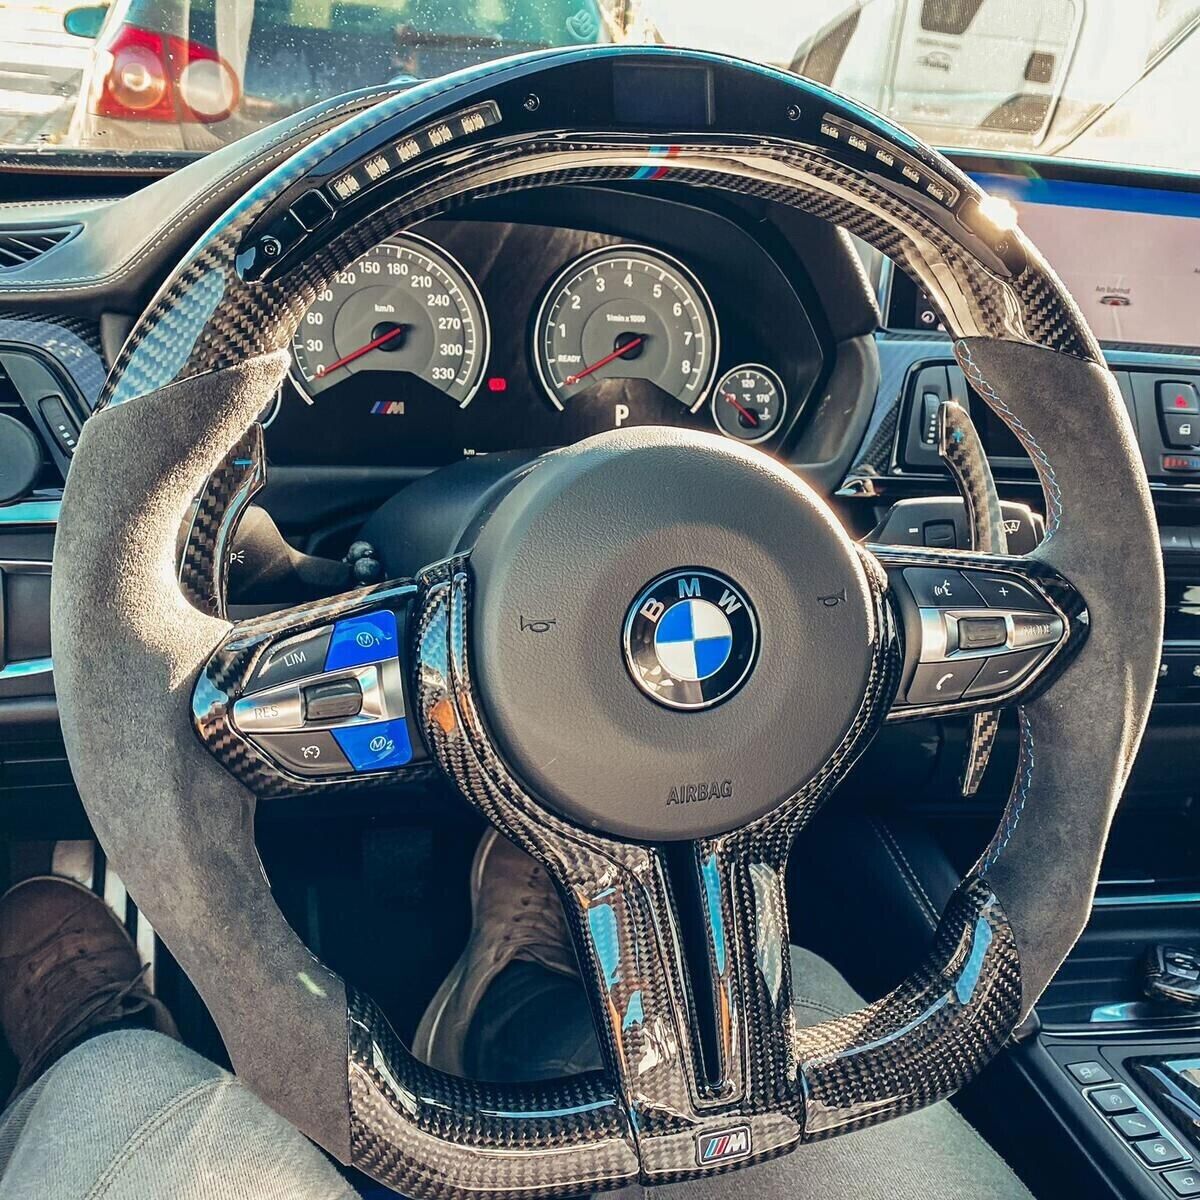 Led Carbon Fiber Alcantara Steering Wheel For BMW M1 M2 M3 M4 M5 F87 F80 F10 X6